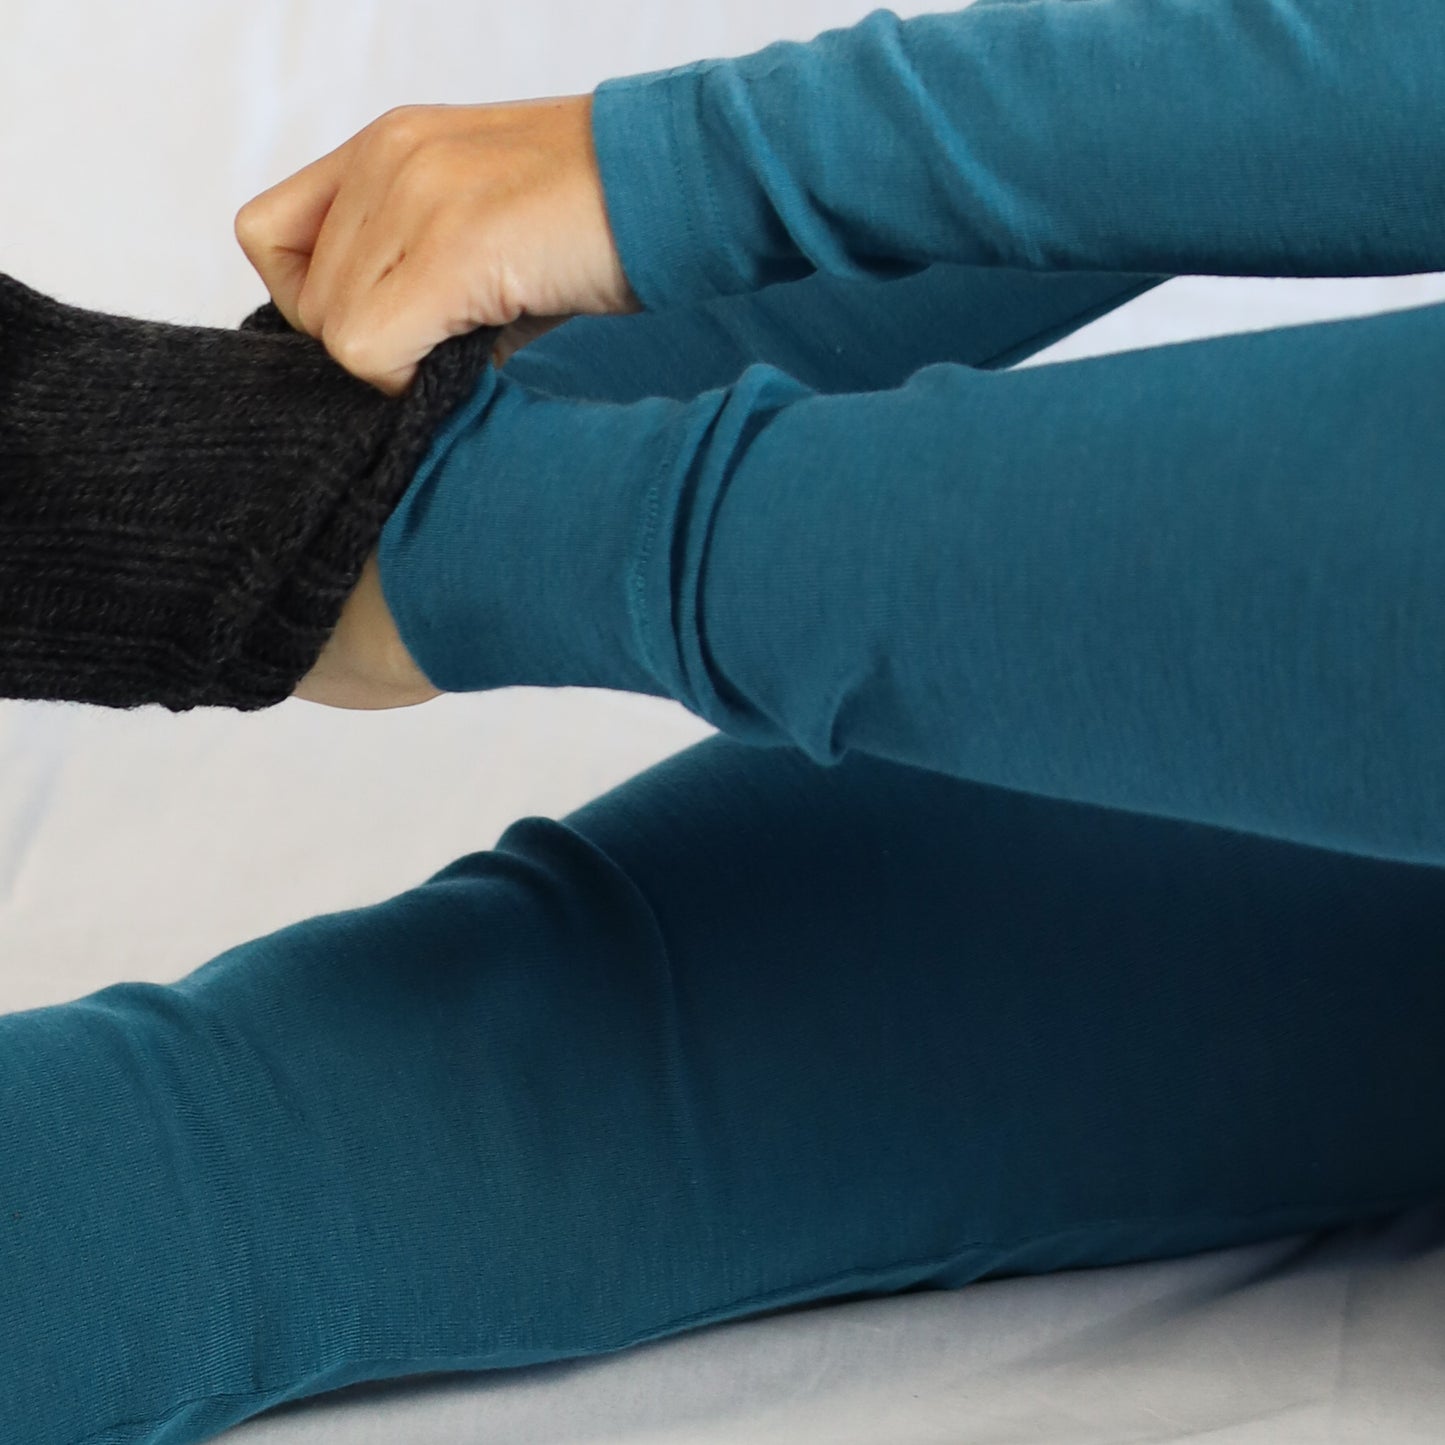 Hocosa Women Legging with Cuff, Wool/Silk, Sea Blue – Warmth and